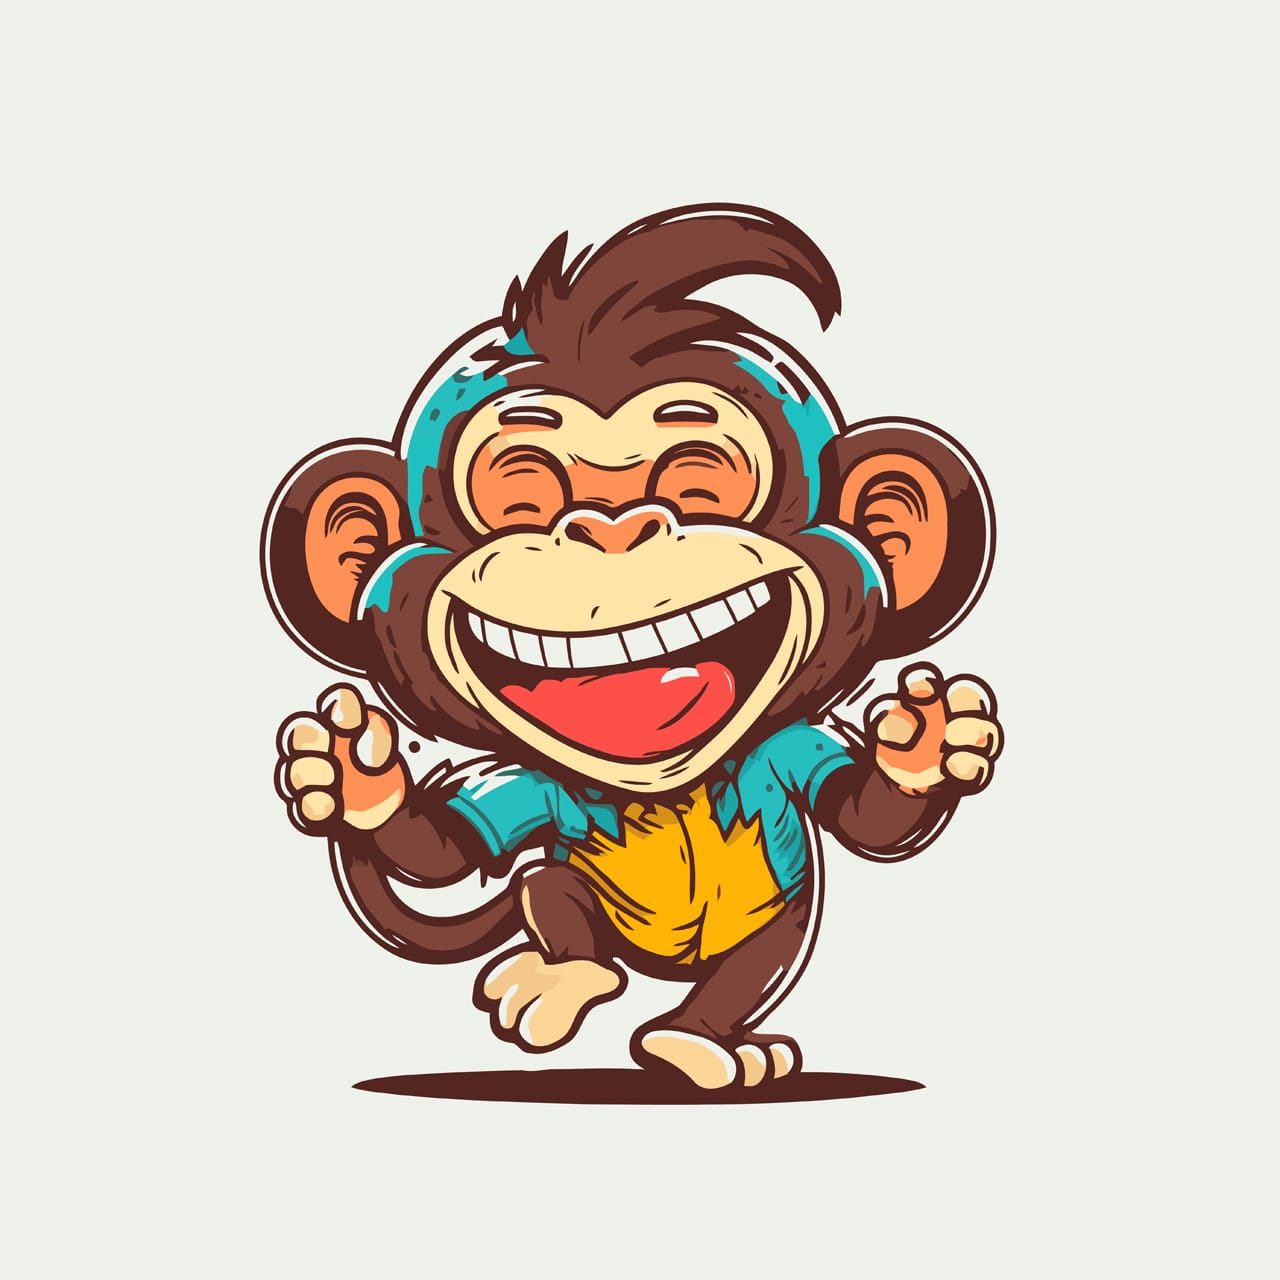 Monkey chimpanzee cartoon character logo mascot design business brandingnew name